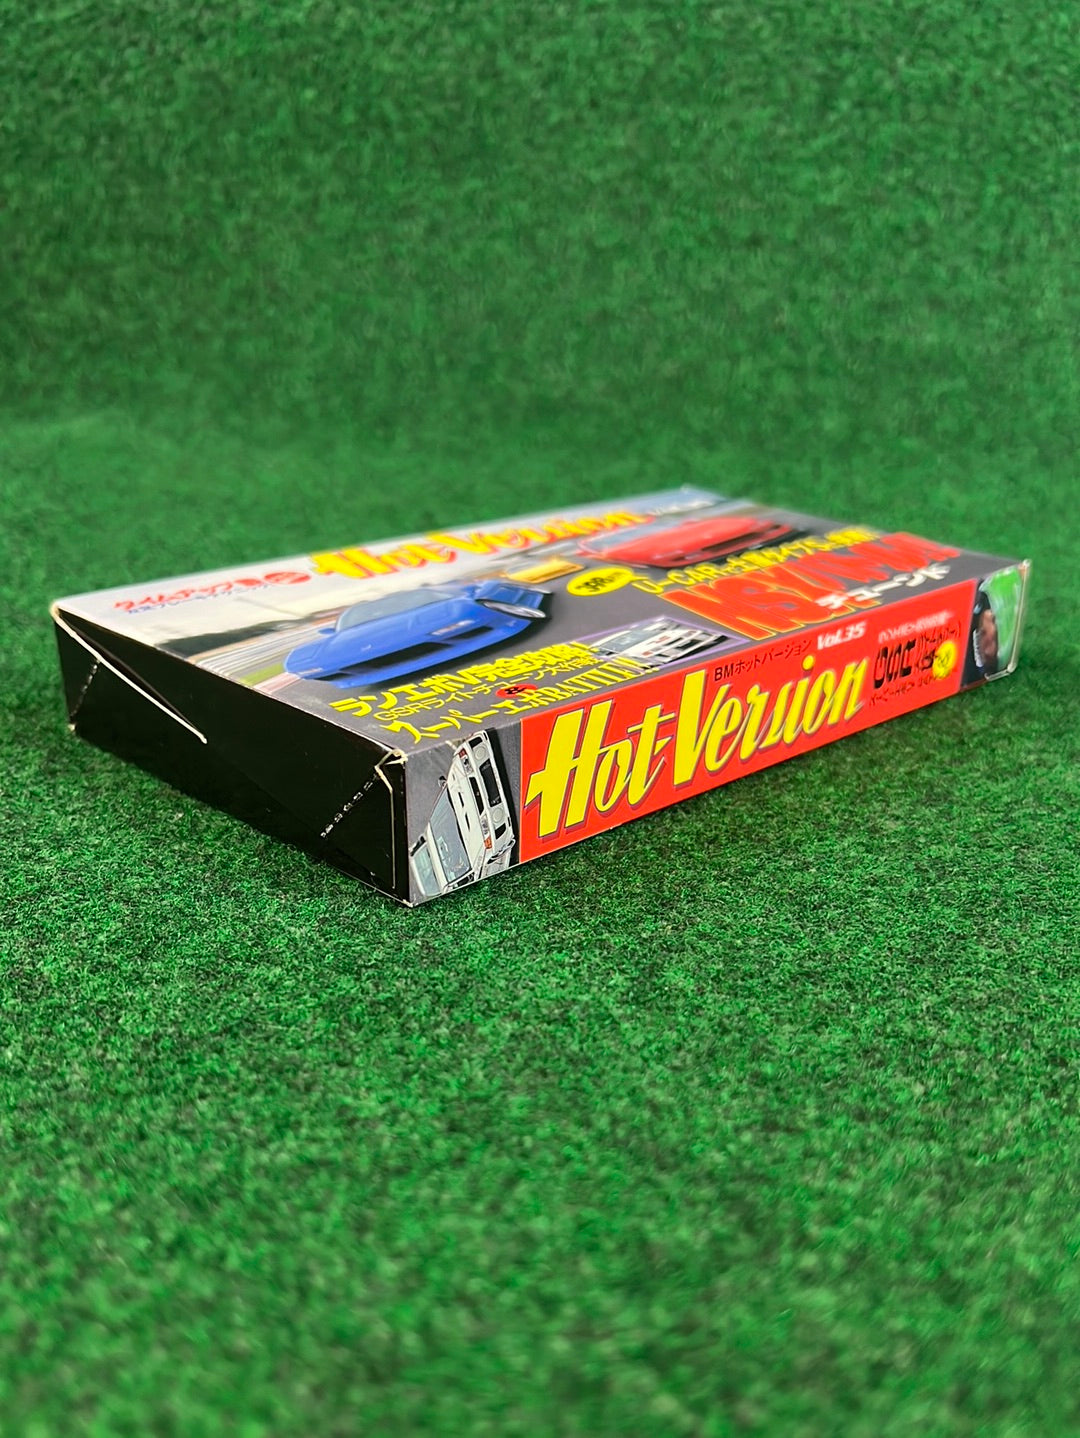 Hot Version VHS - Vol. 35